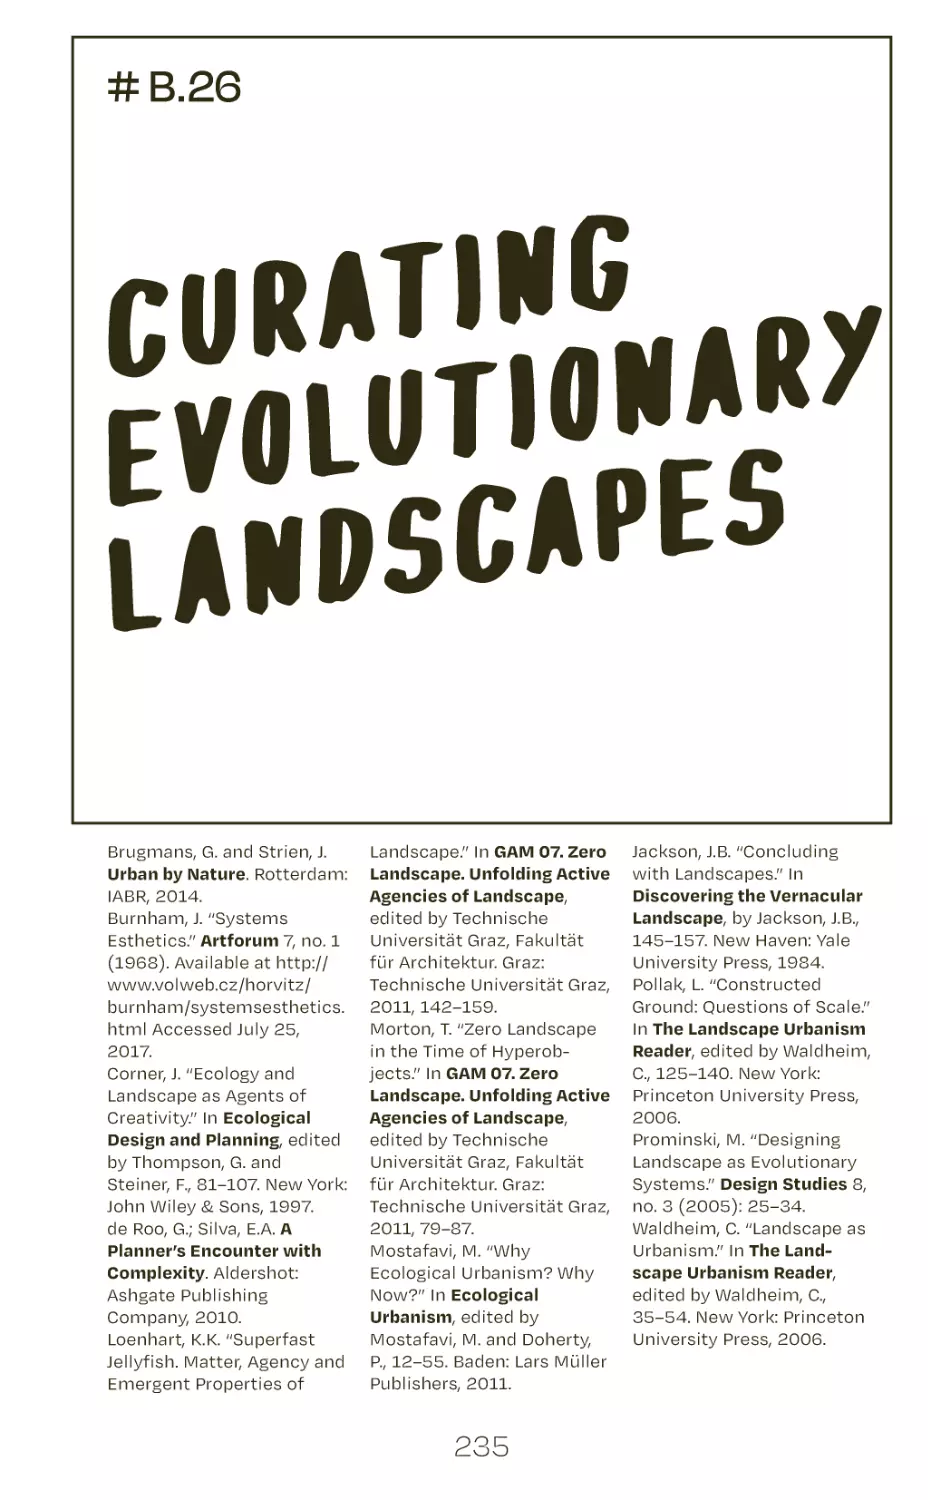 # B.26 curating evolutionary landscapes